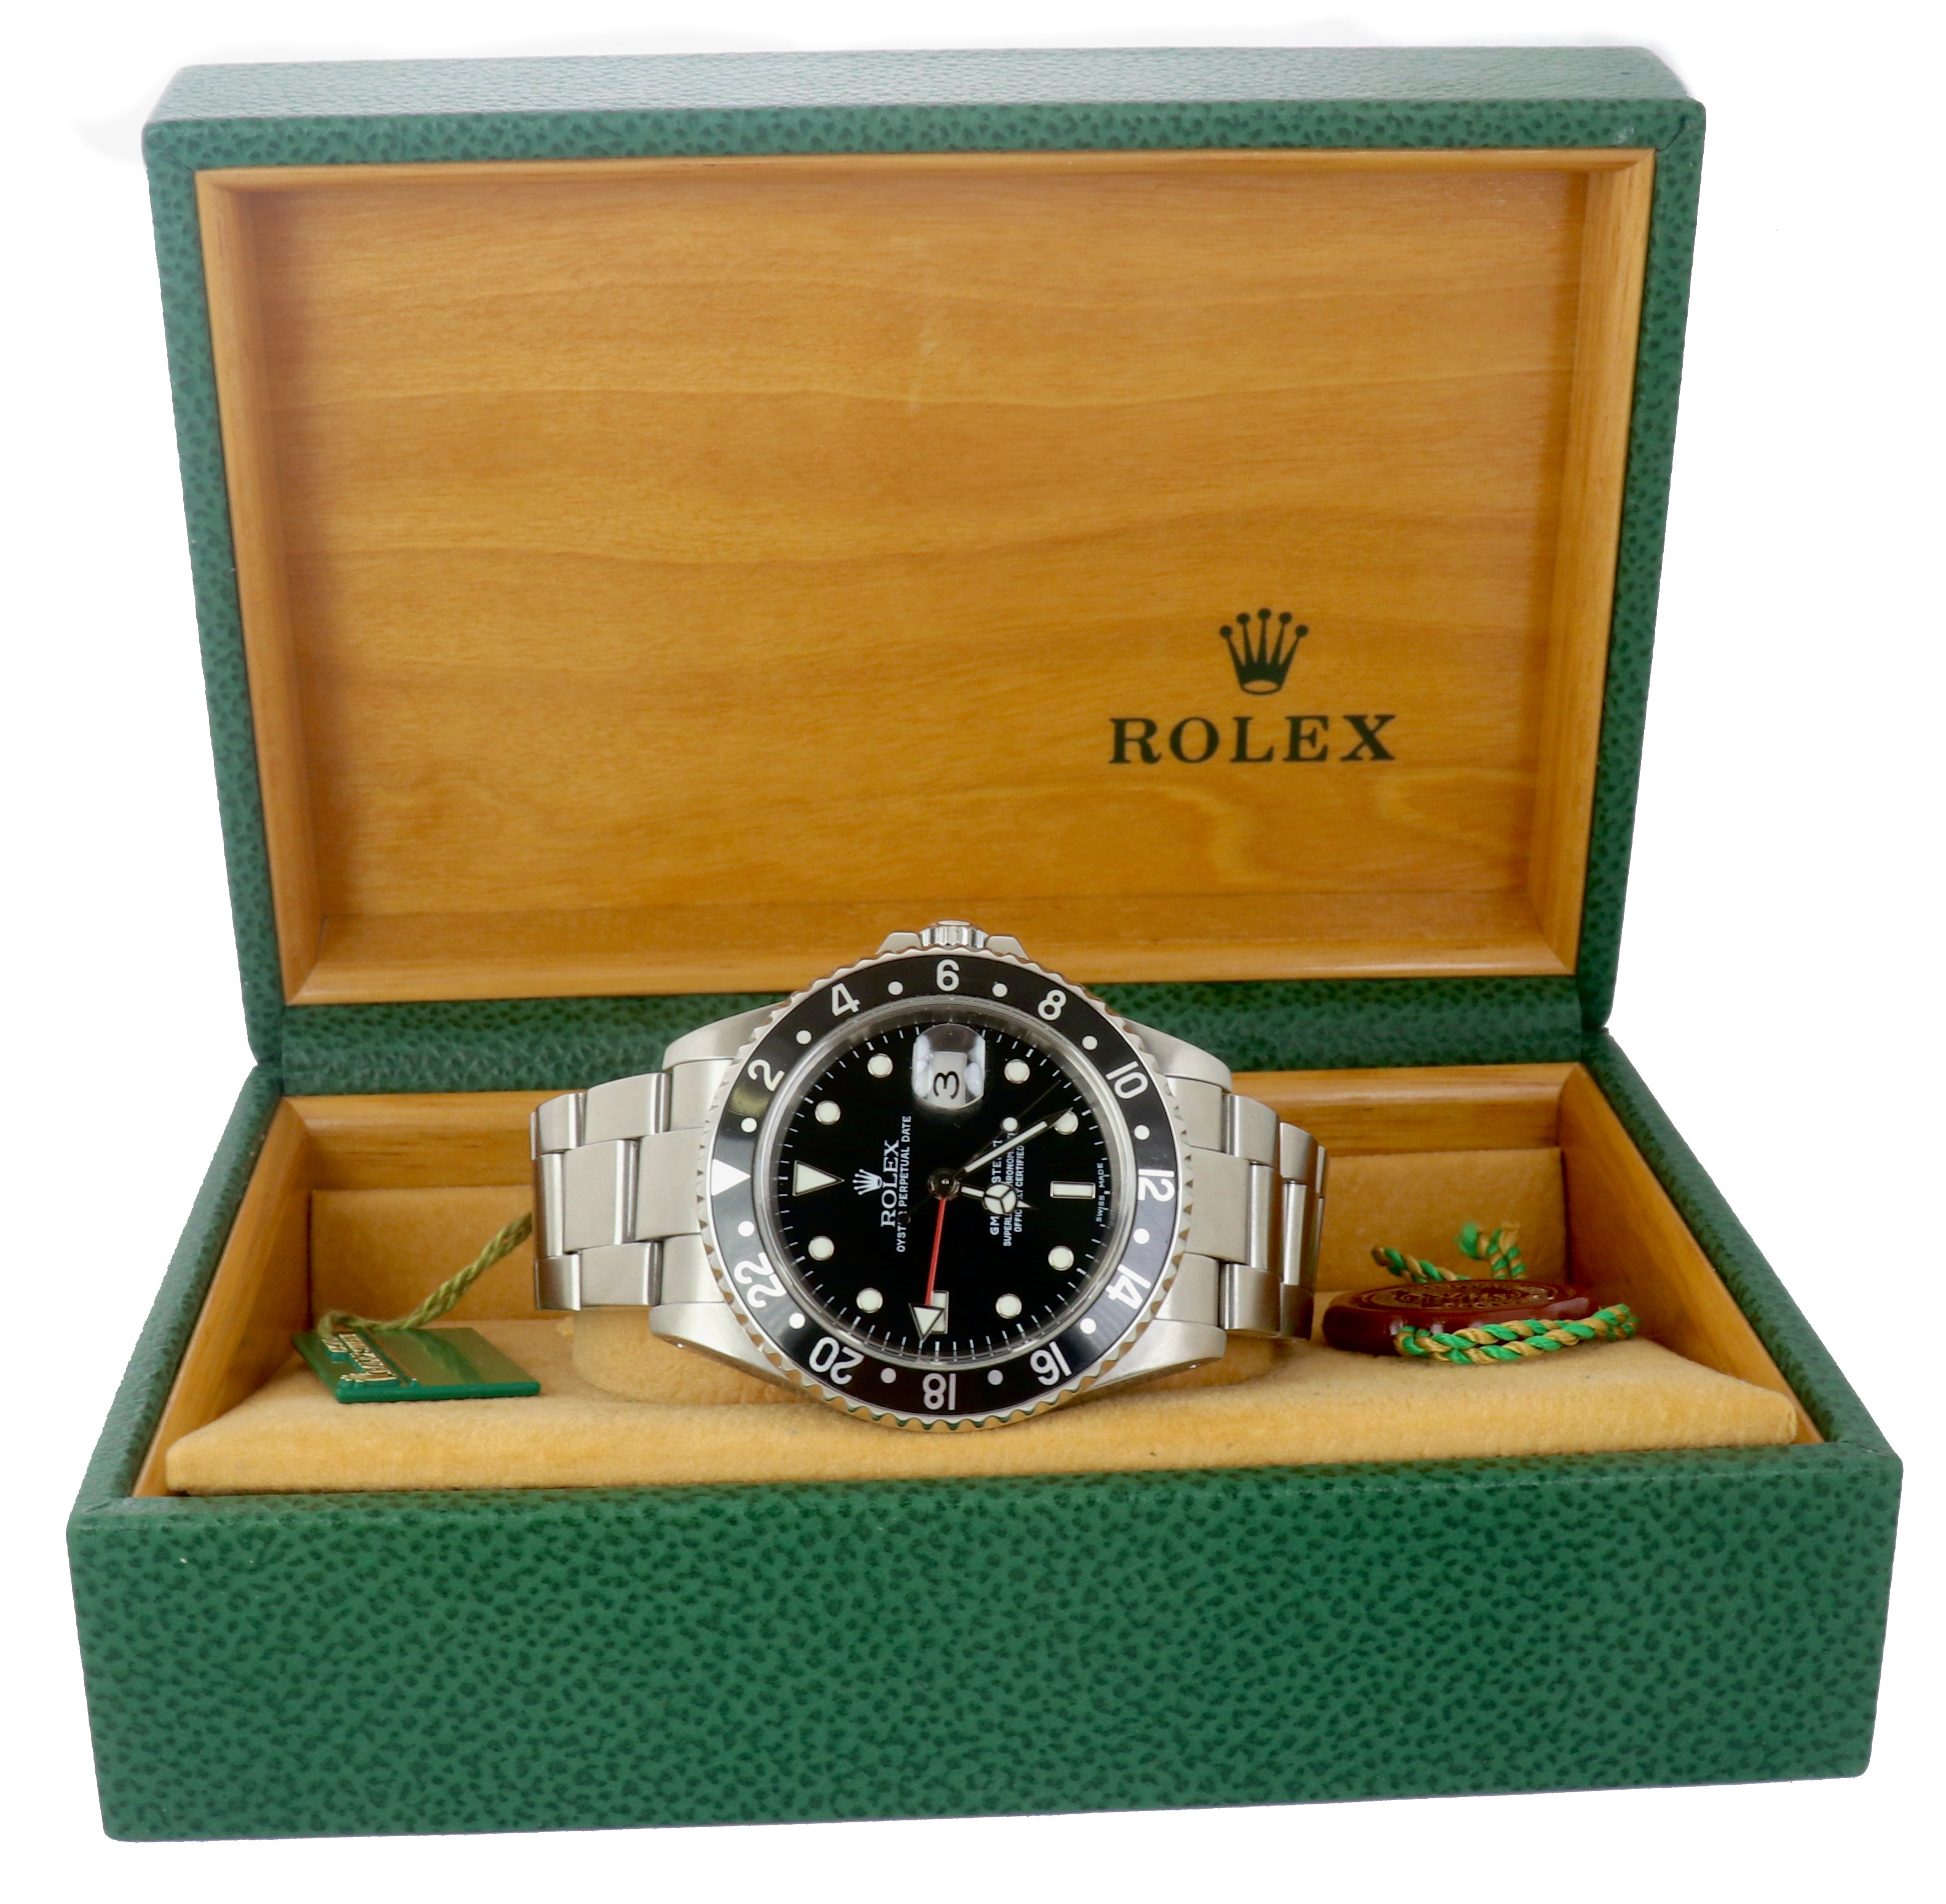 MINT 2002 Rolex GMT-Master II Black 16710 Y Stainless Steel 40mm SEL Watch PAPER